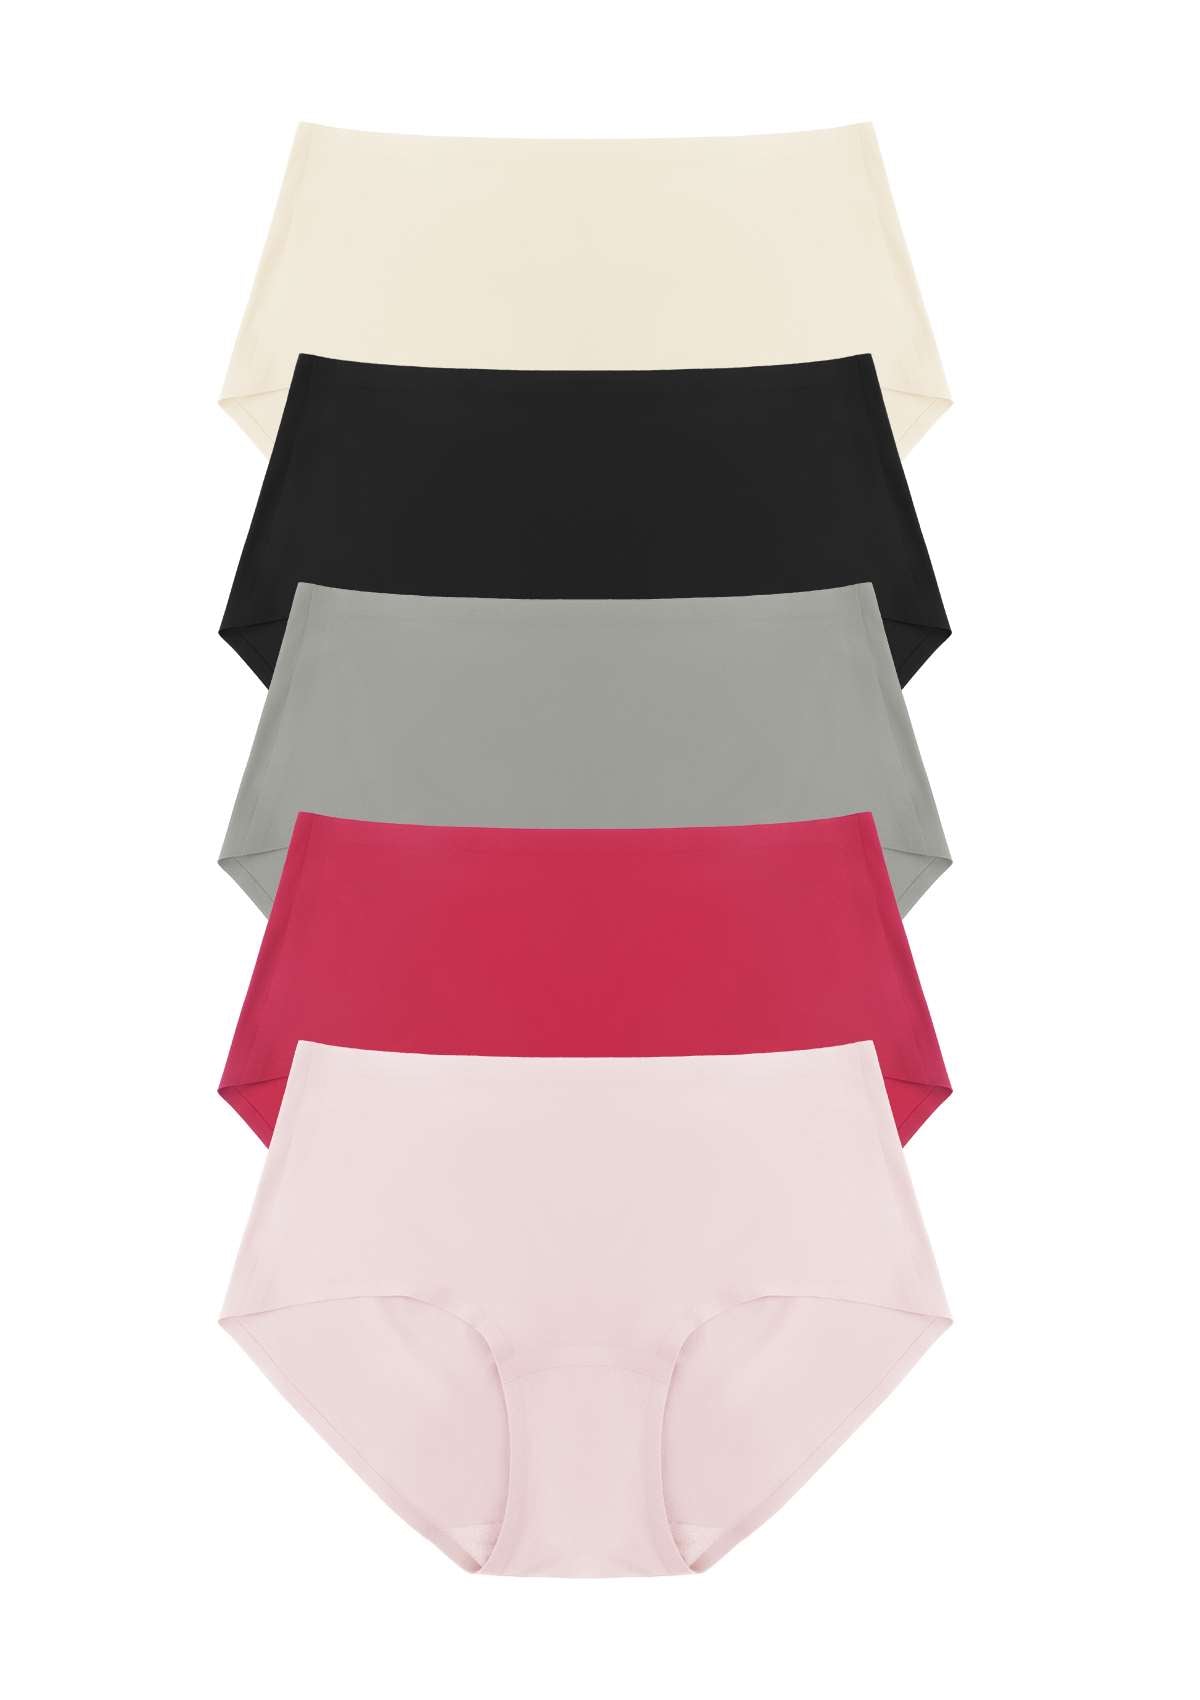 HSIA FlexiFit Soft Stretch Seamless Brief Underwear Bundle - 10 Packs/$35 / XS-L / Black+Peach Beige+Red+Dusty Rose+Gray